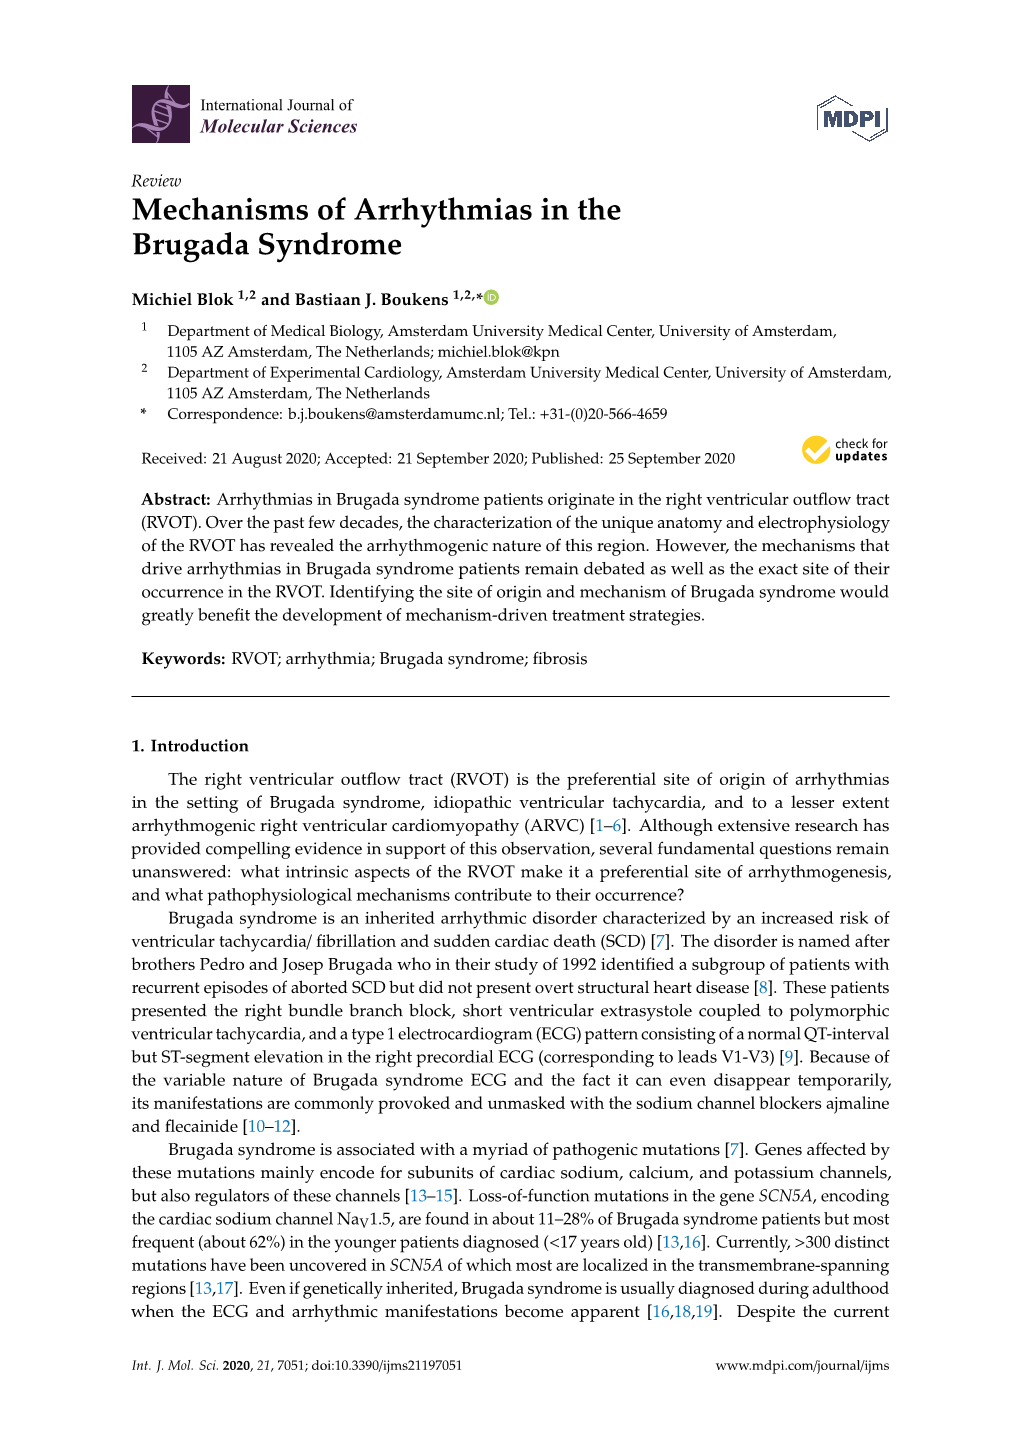 Mechanisms of Arrhythmias in the Brugada Syndrome